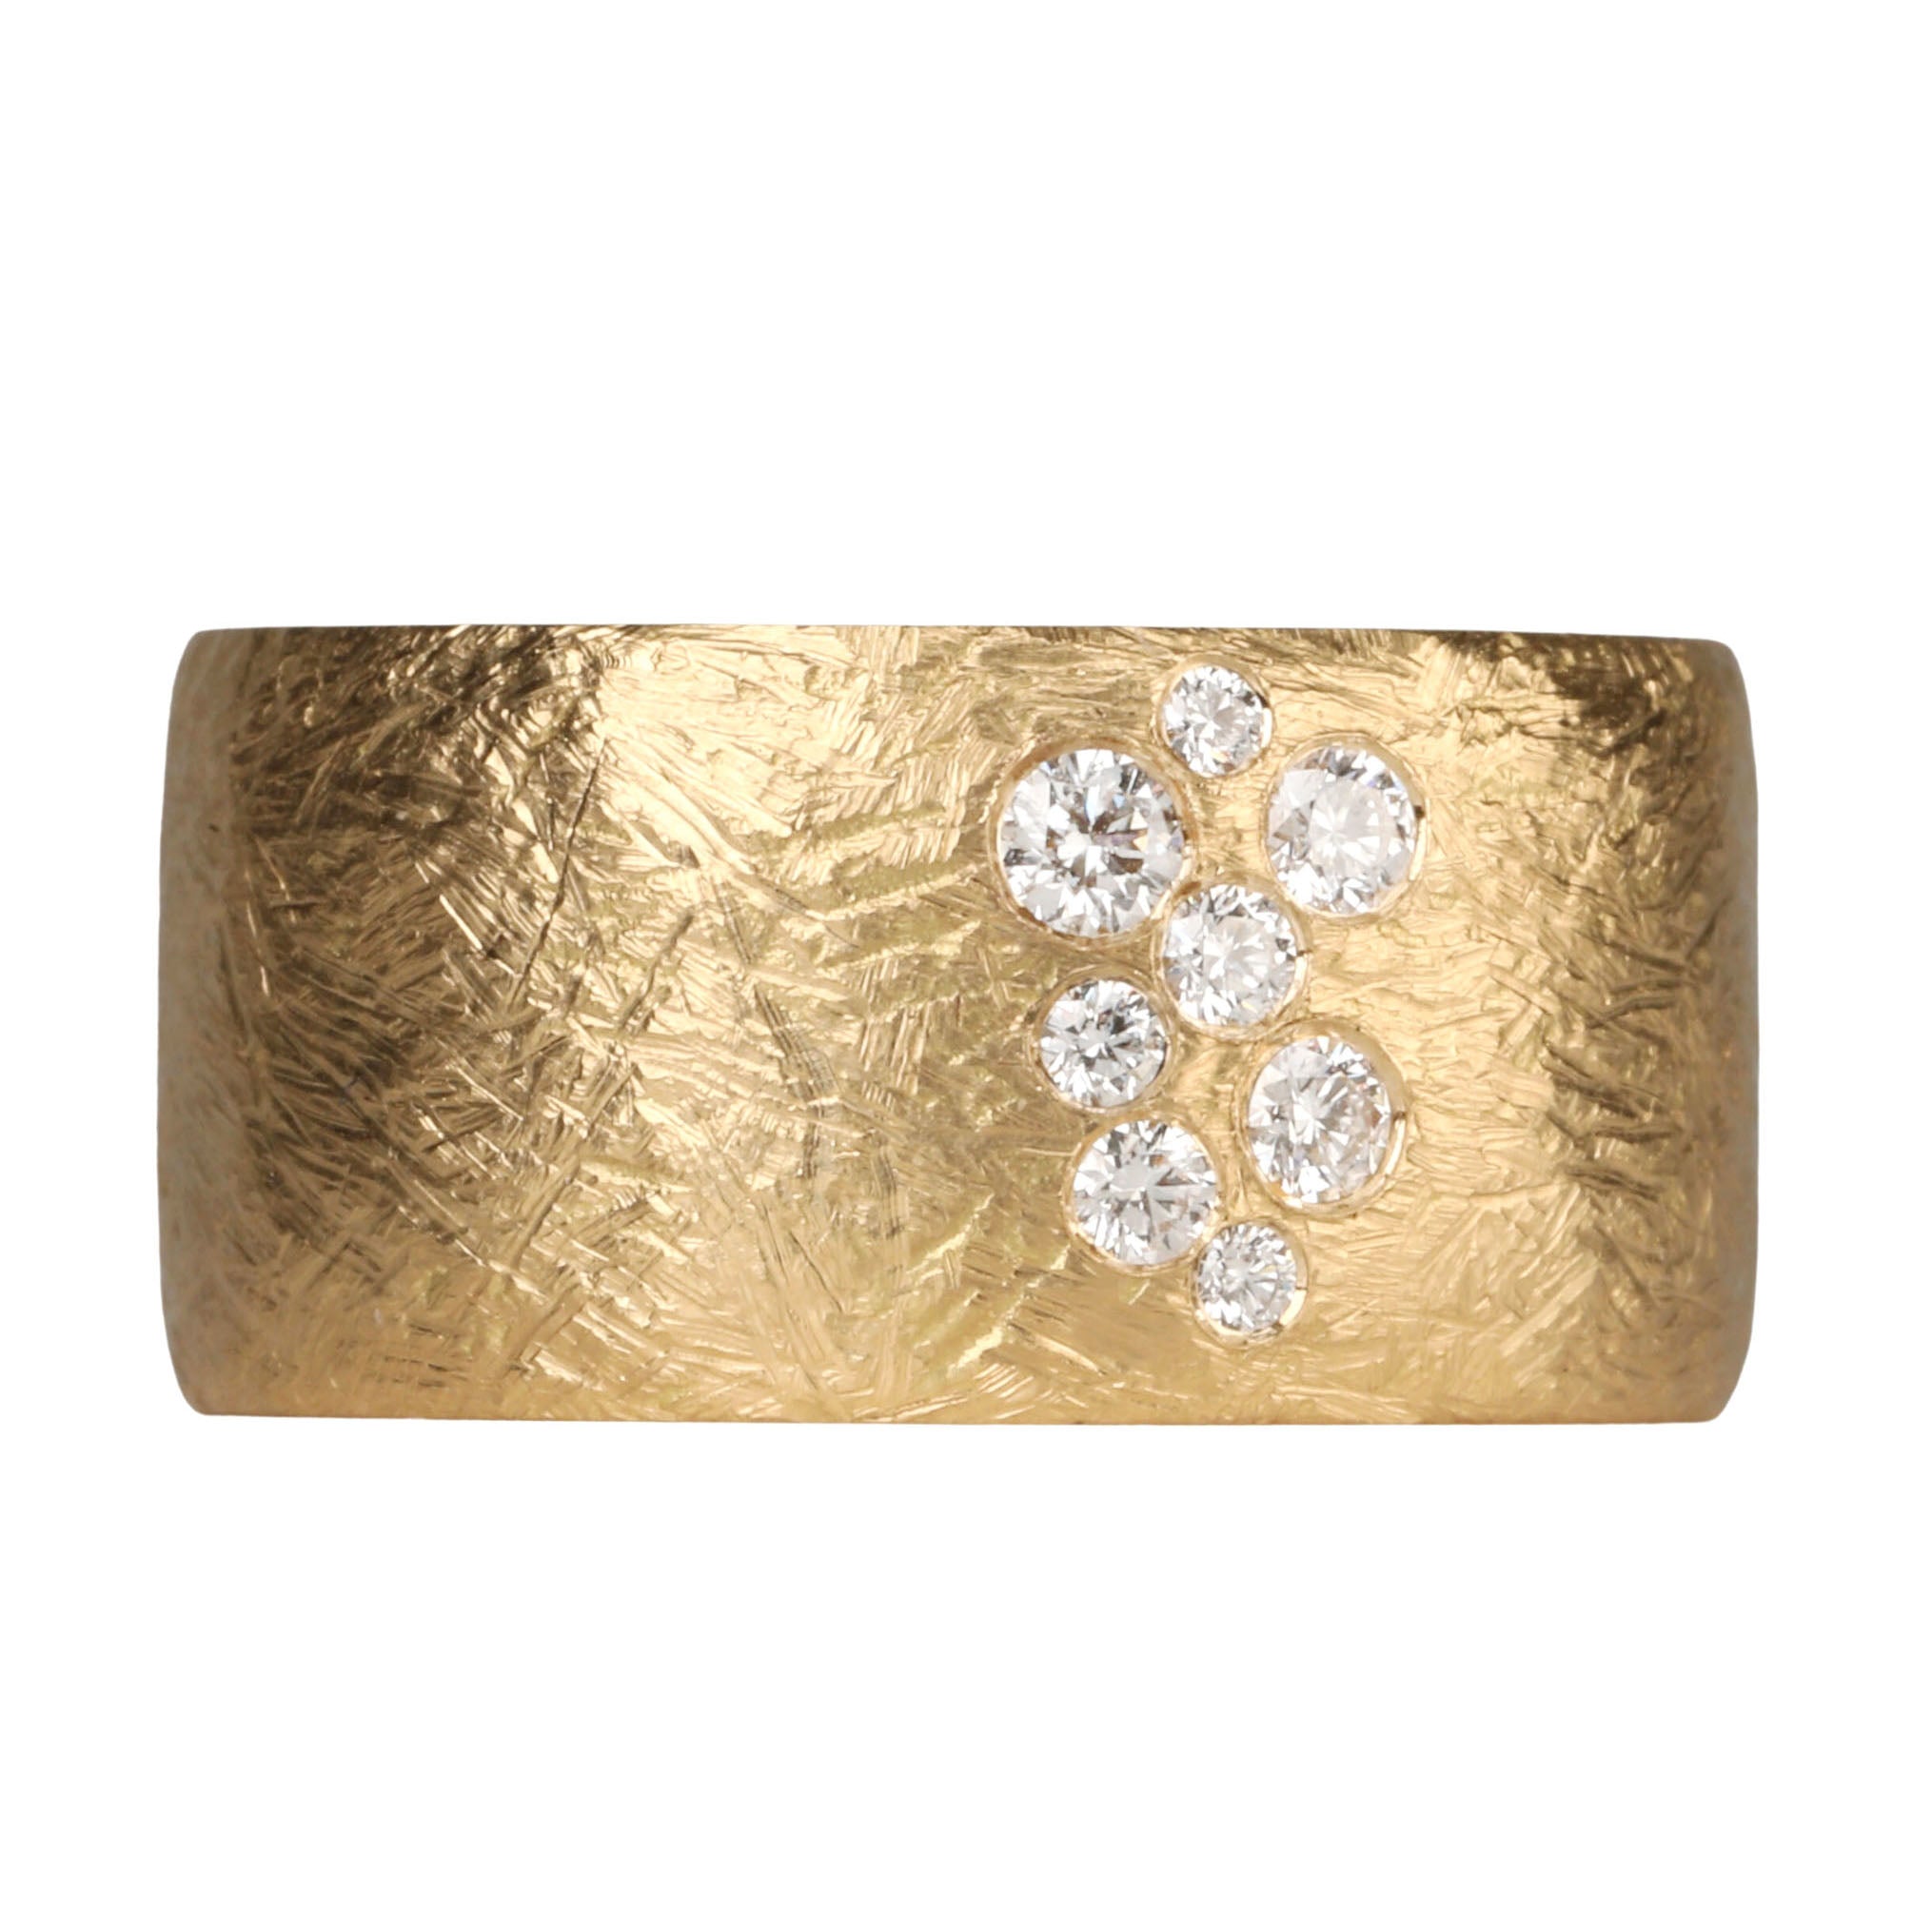 18K Gold Cigar Band with Diamond Inlay "Constellation" Motif - Peridot Fine Jewelry - Anne Sportun